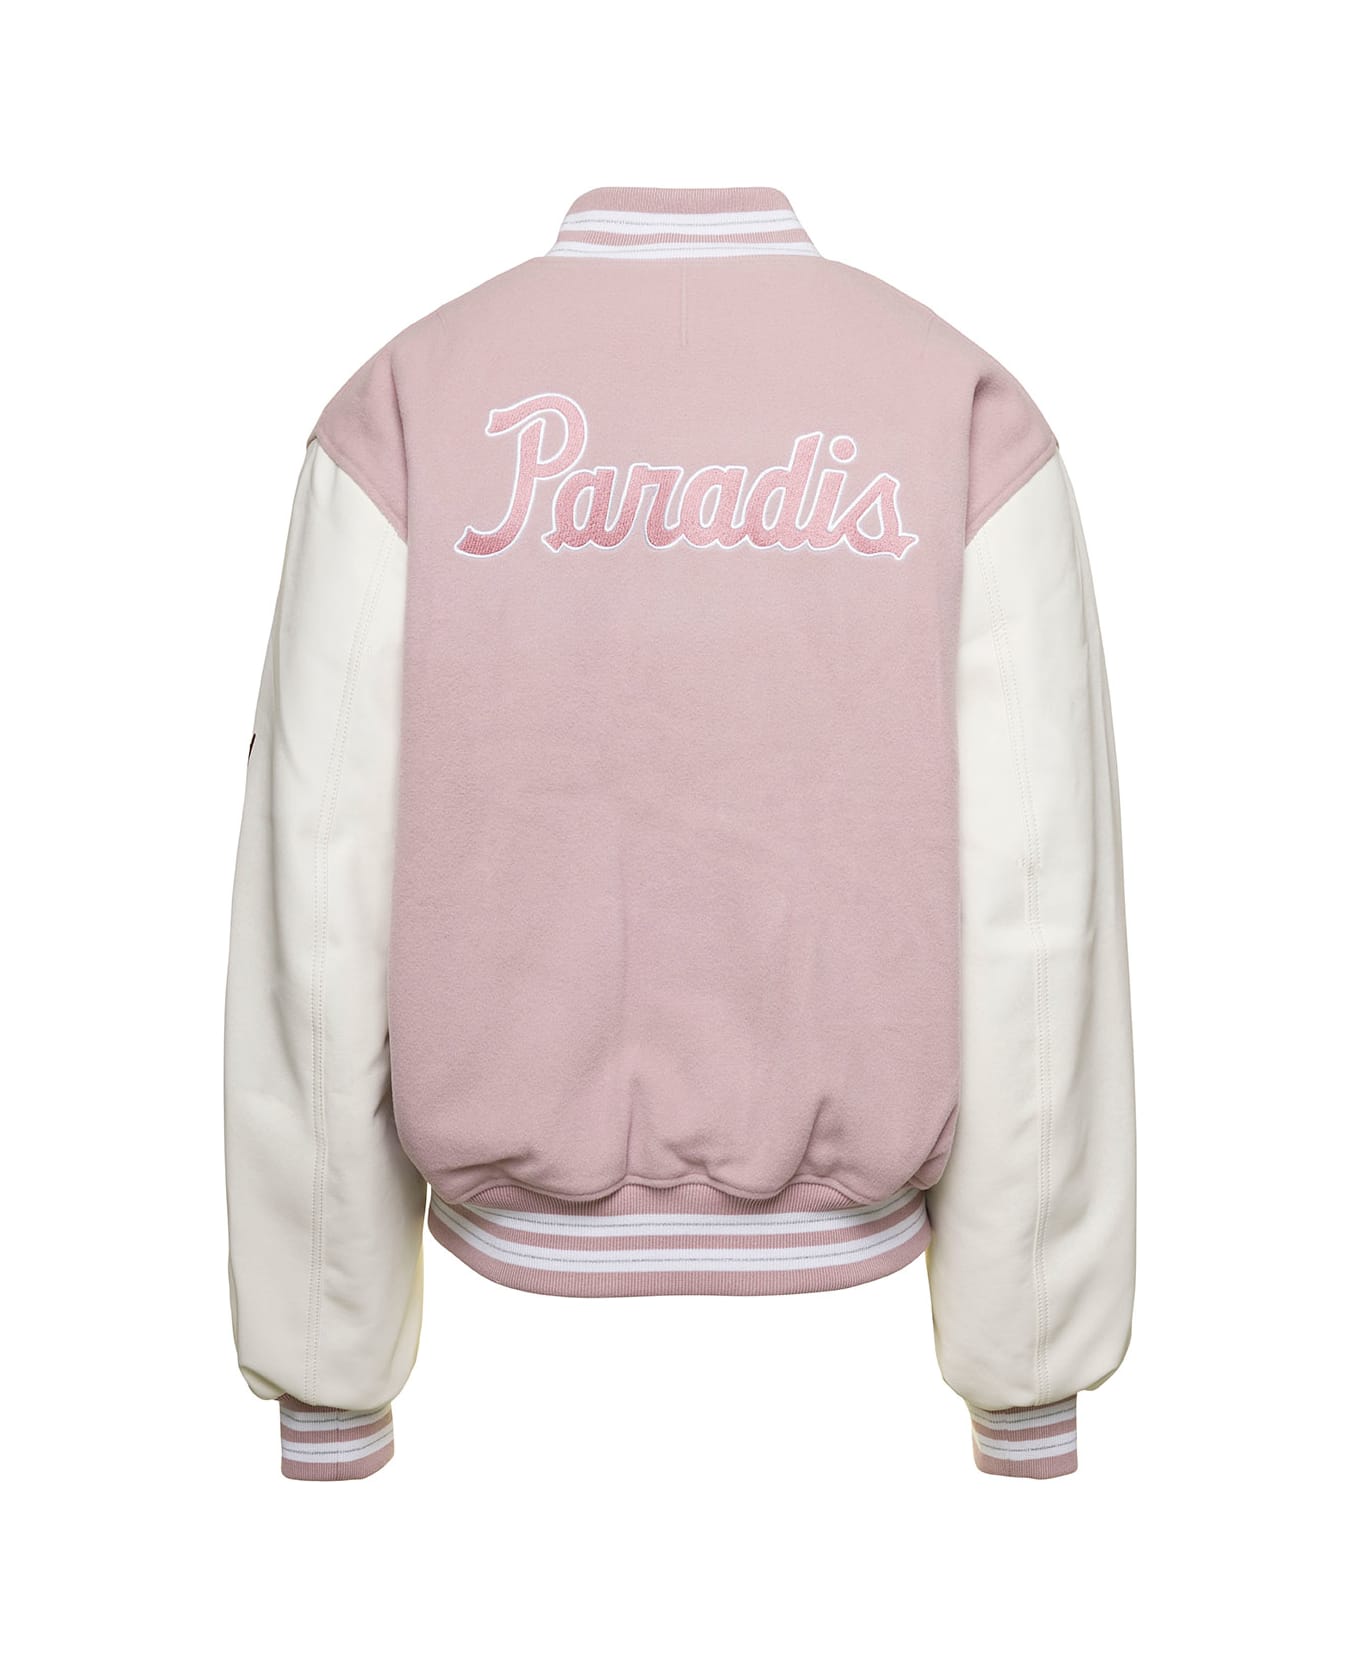 3.Paradis Varsity Letterman Jacket - Pink